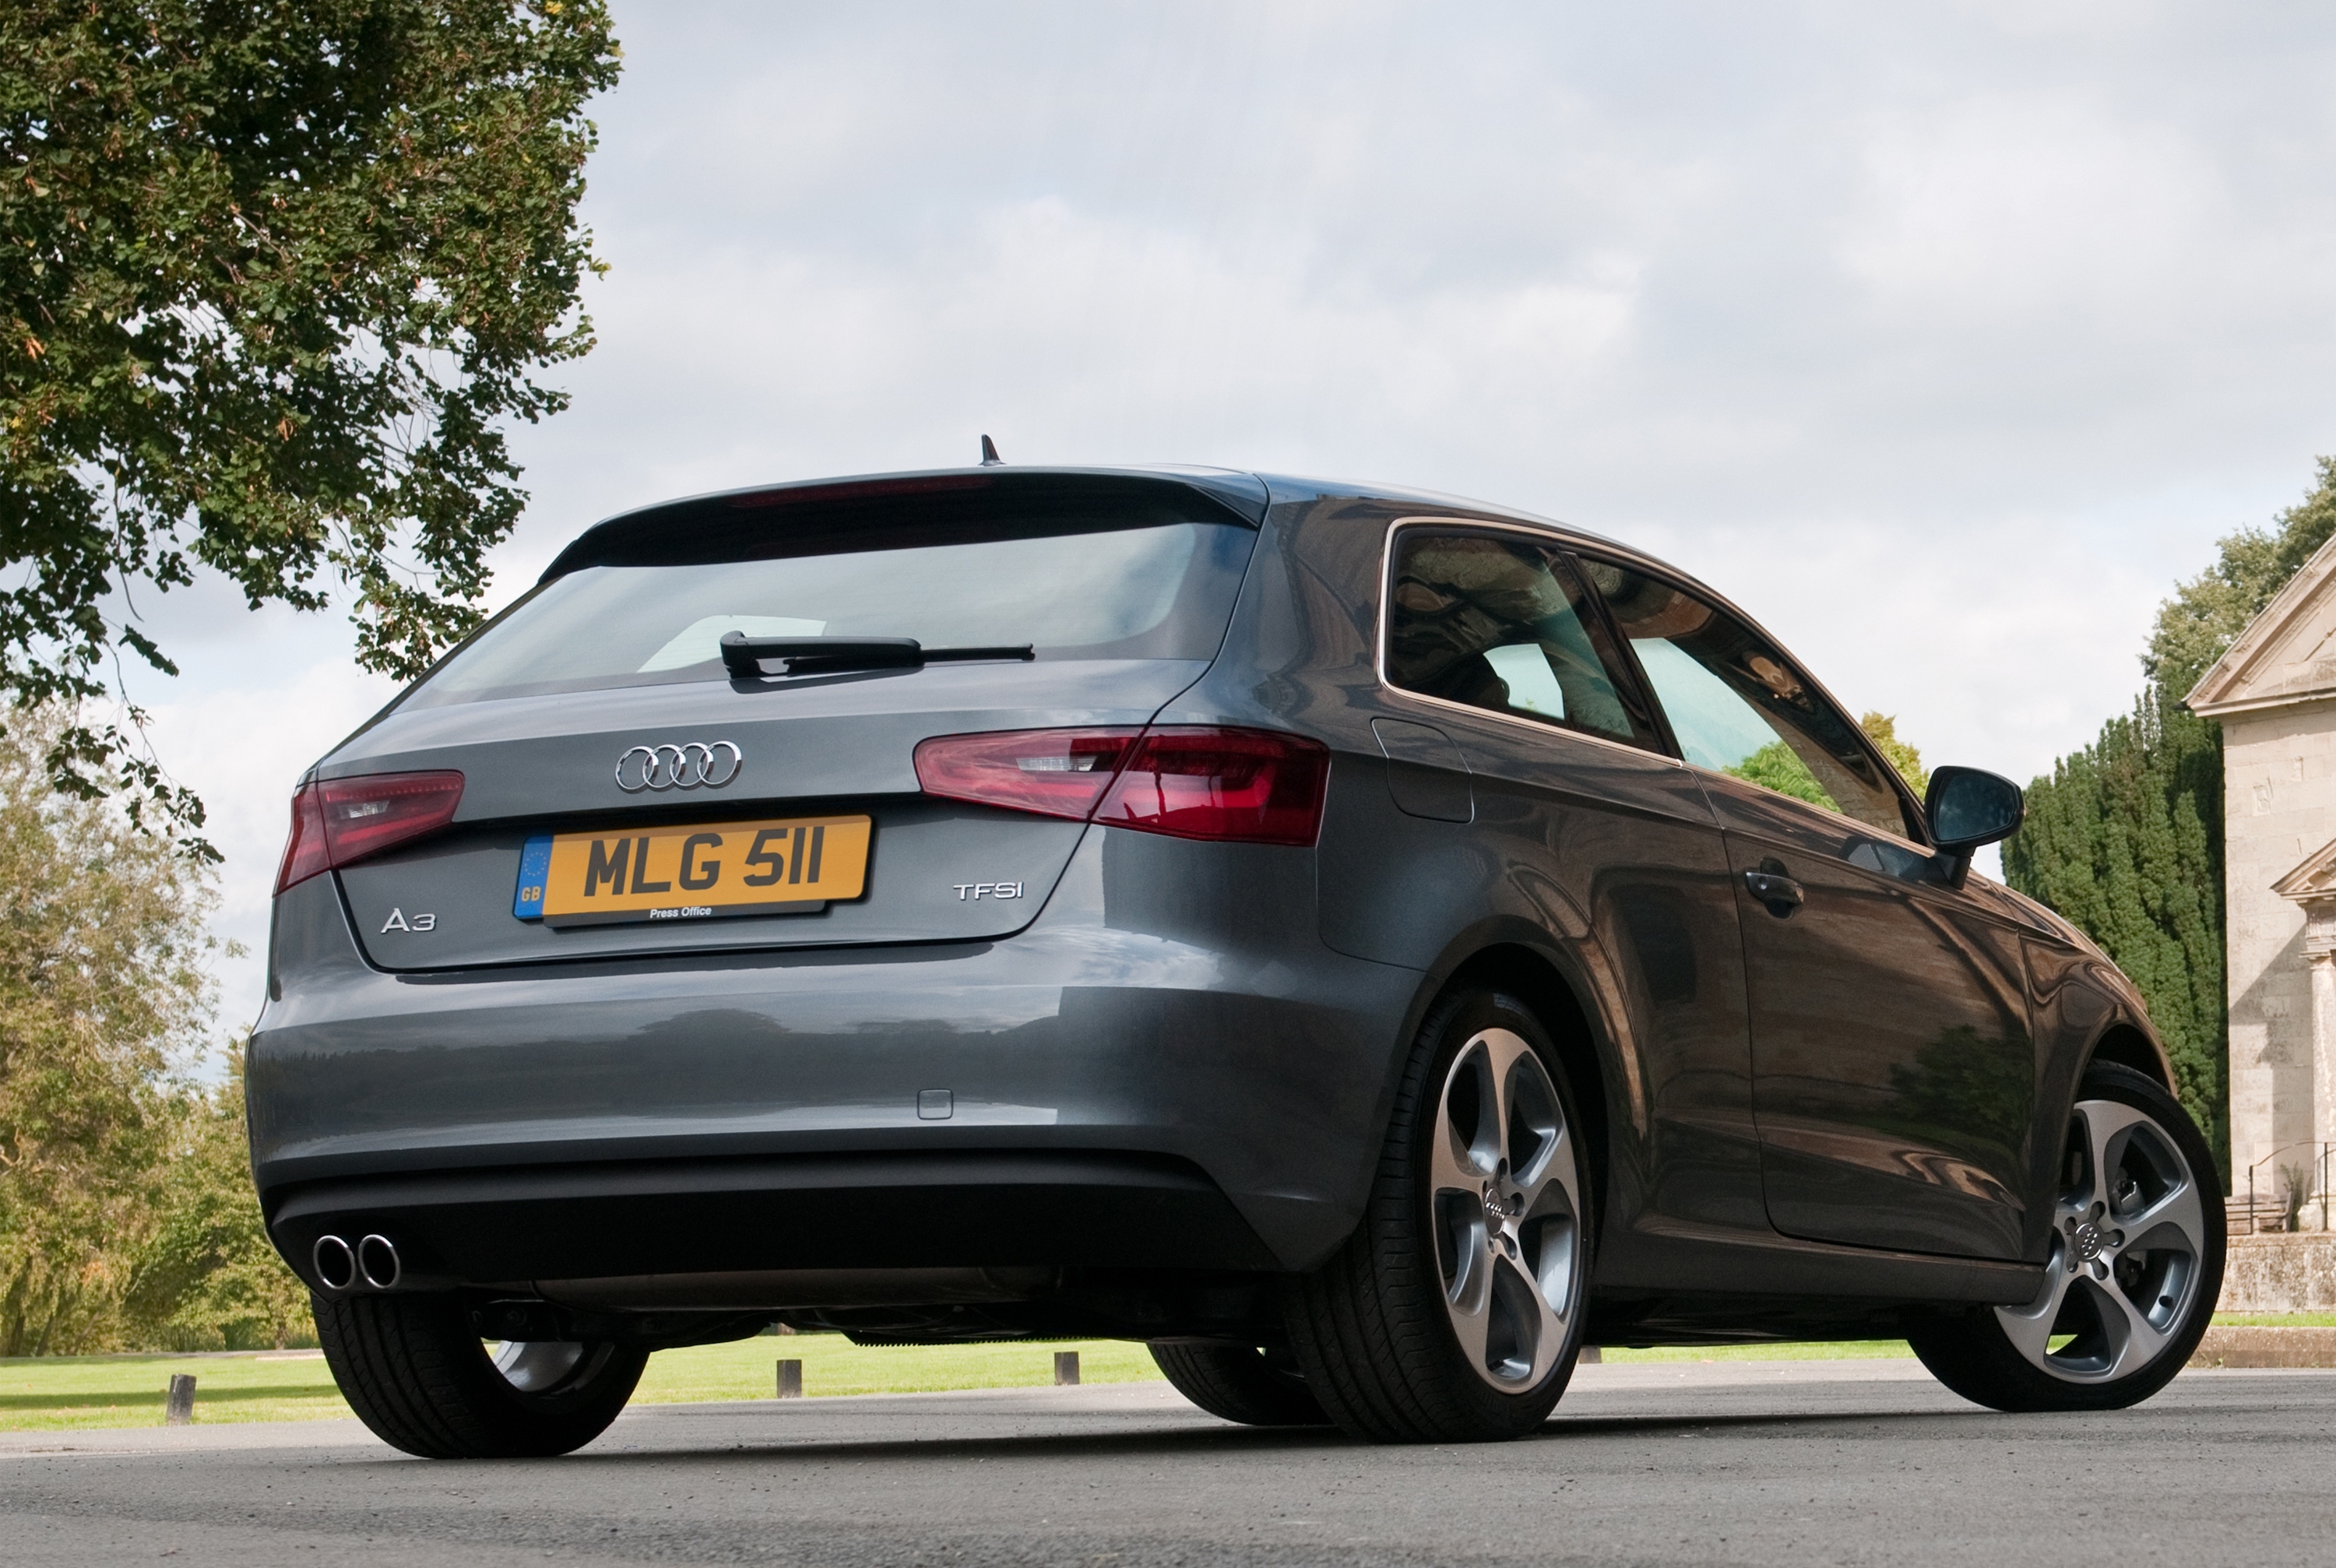 Audi A3 Sedan exterior specifications